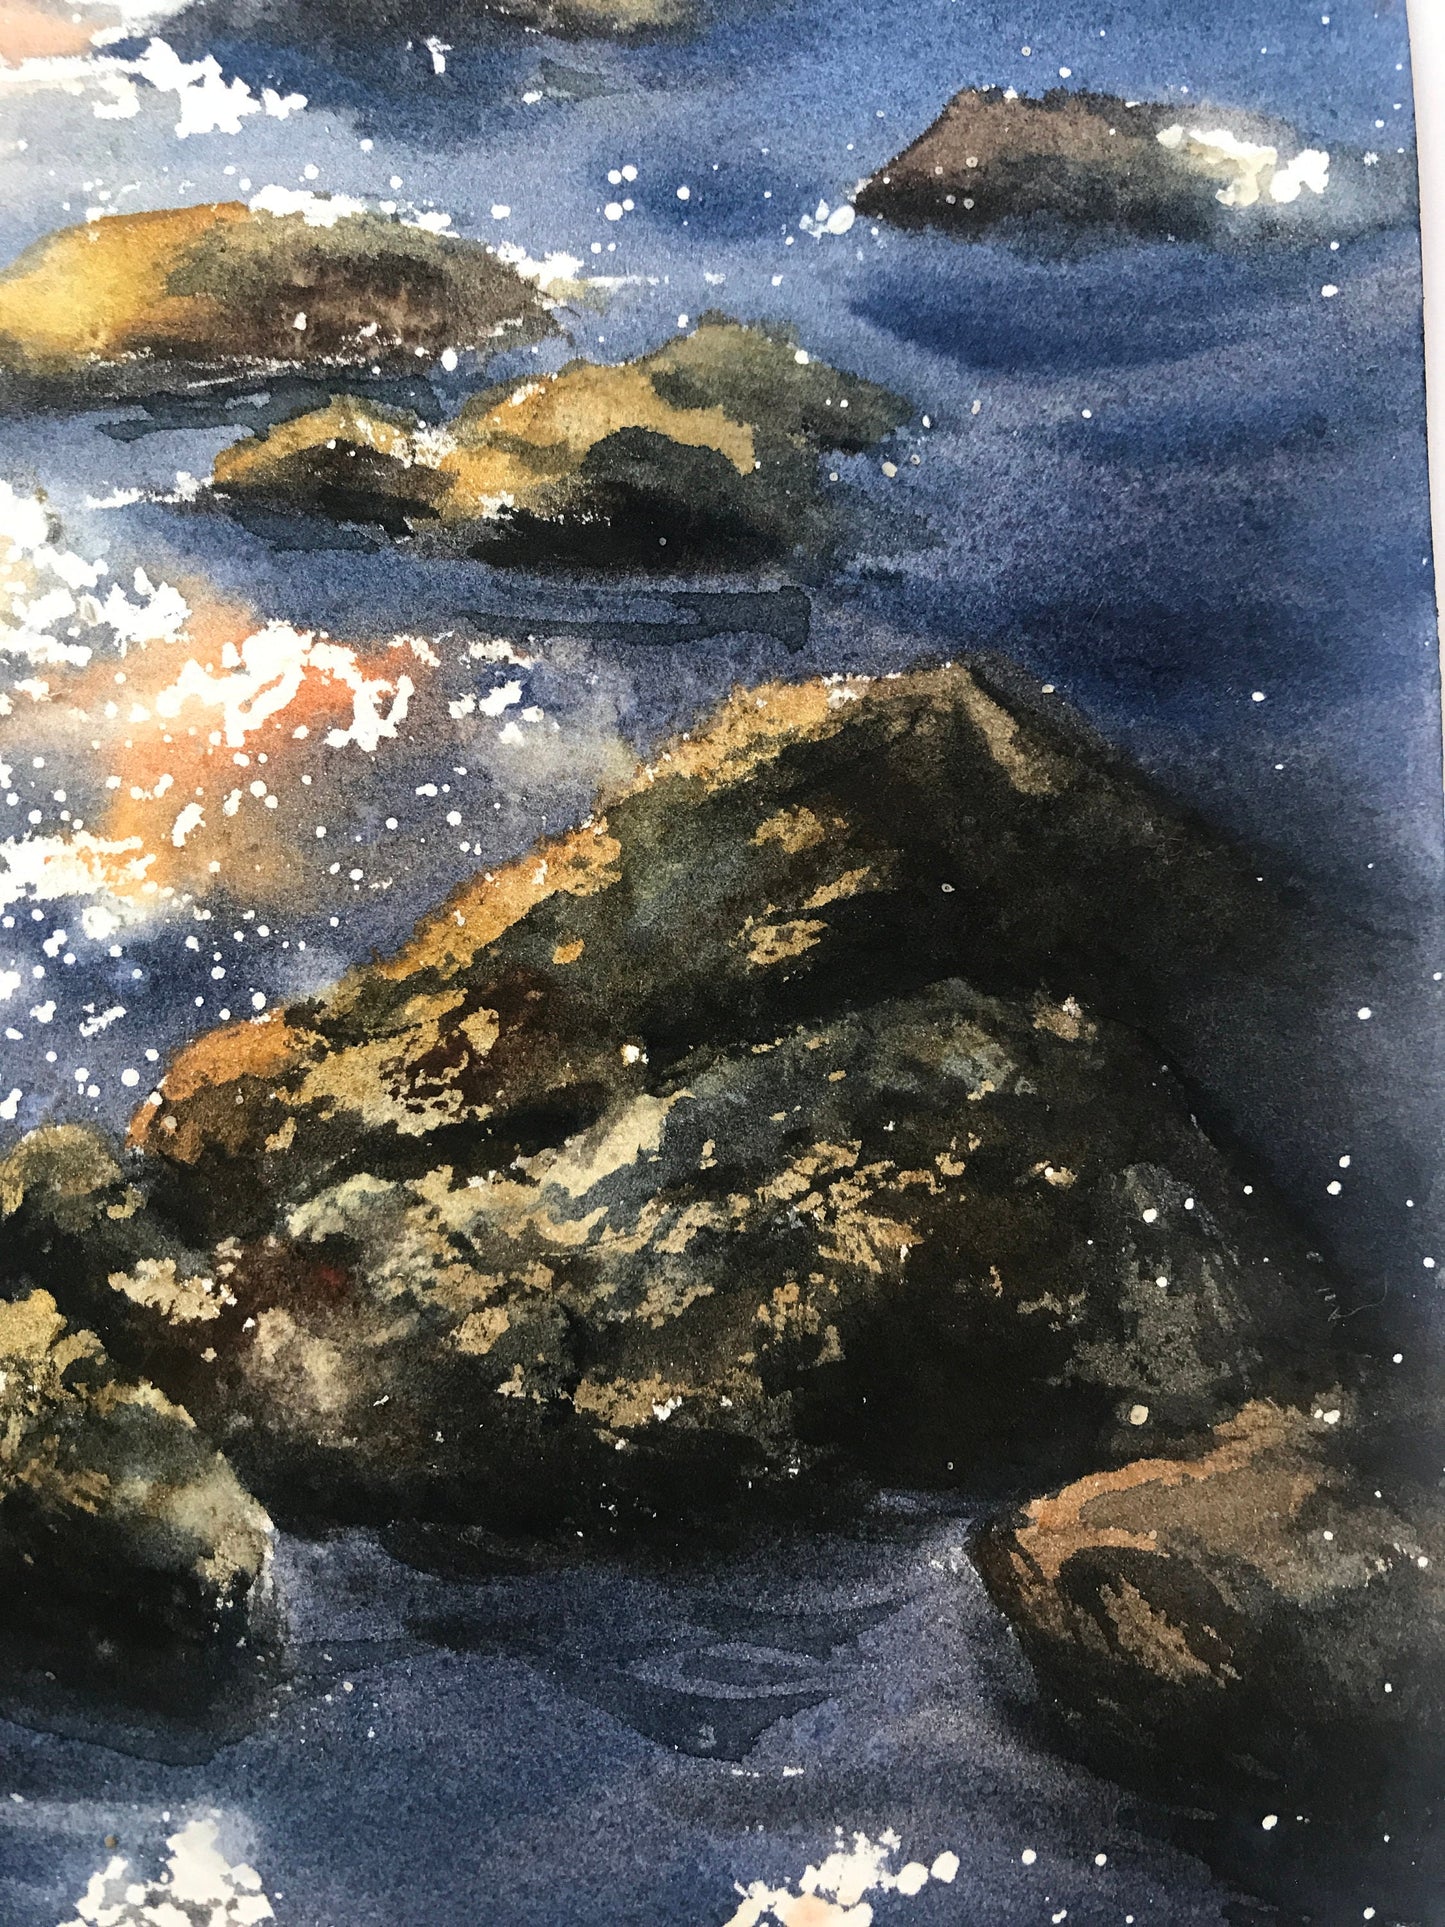 Morning Seascape Watercolor Painting, Original Artwork, Ocean Stones Art, Sun, Bedroom Wall Decor, Gift for Sea Lover